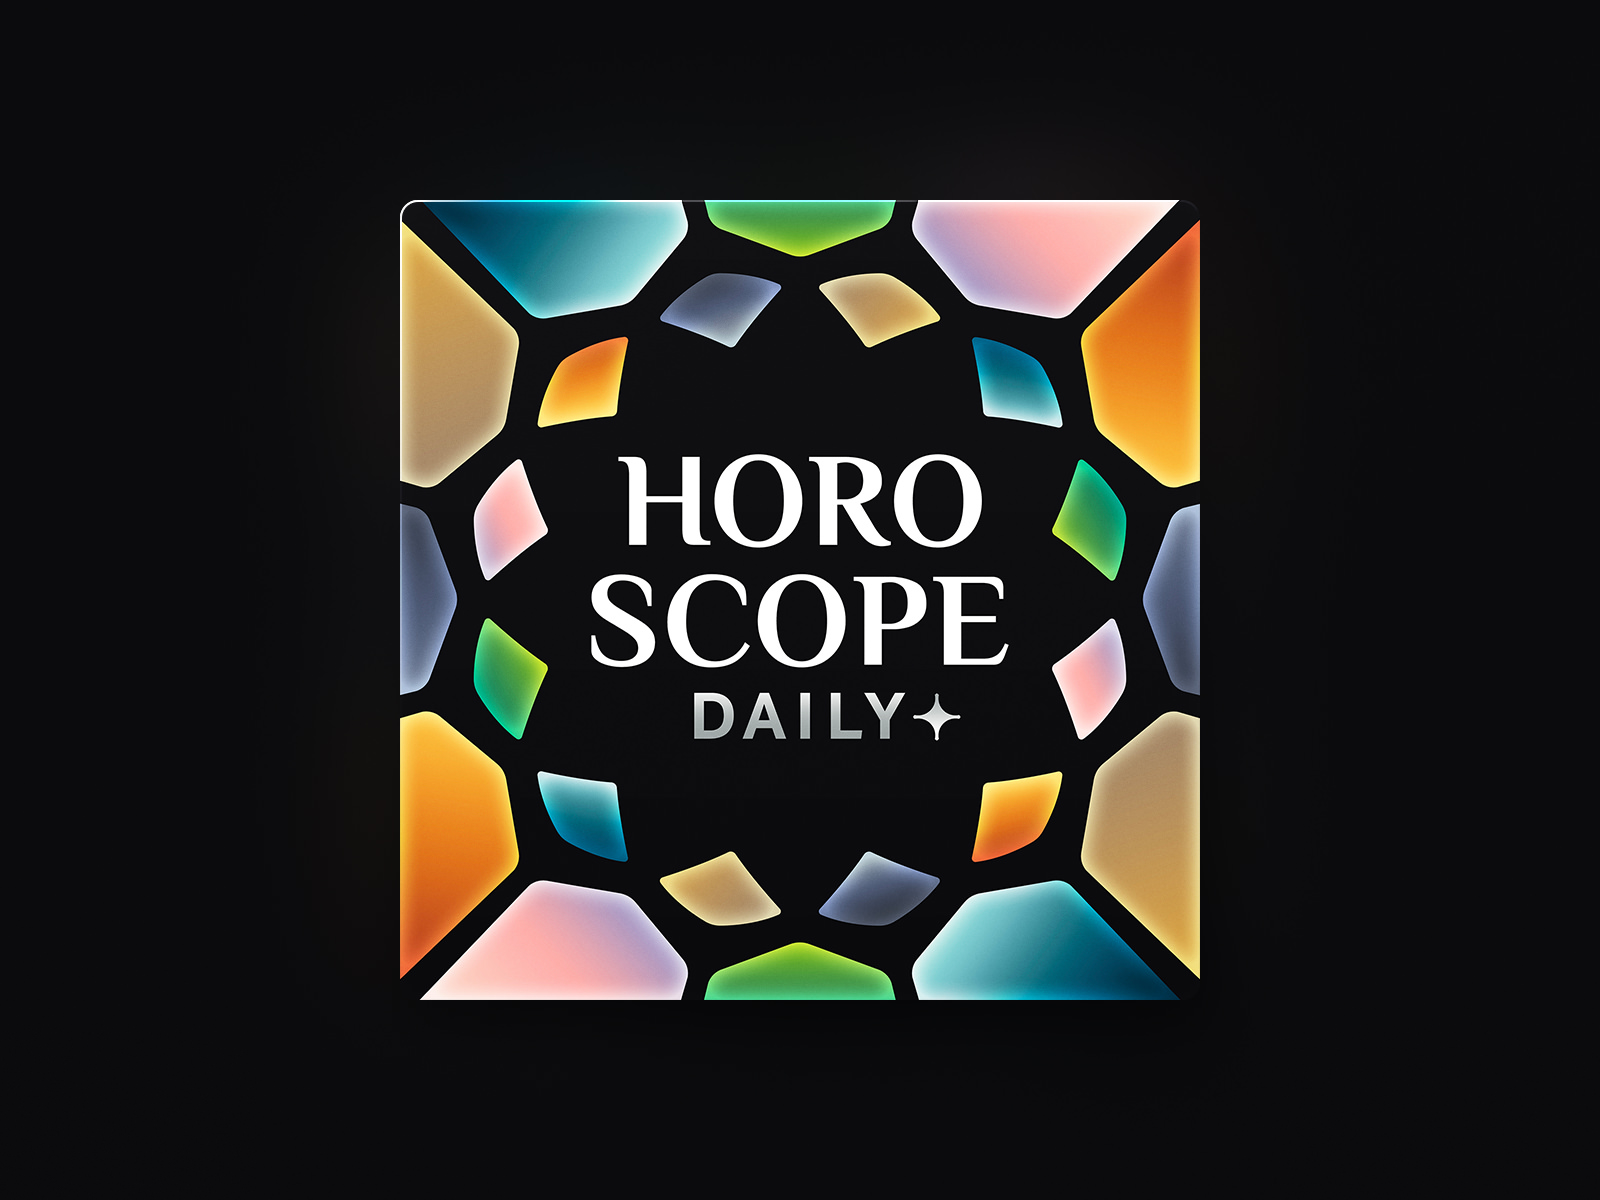 Horoscope Daily + Podcast Channel Branding